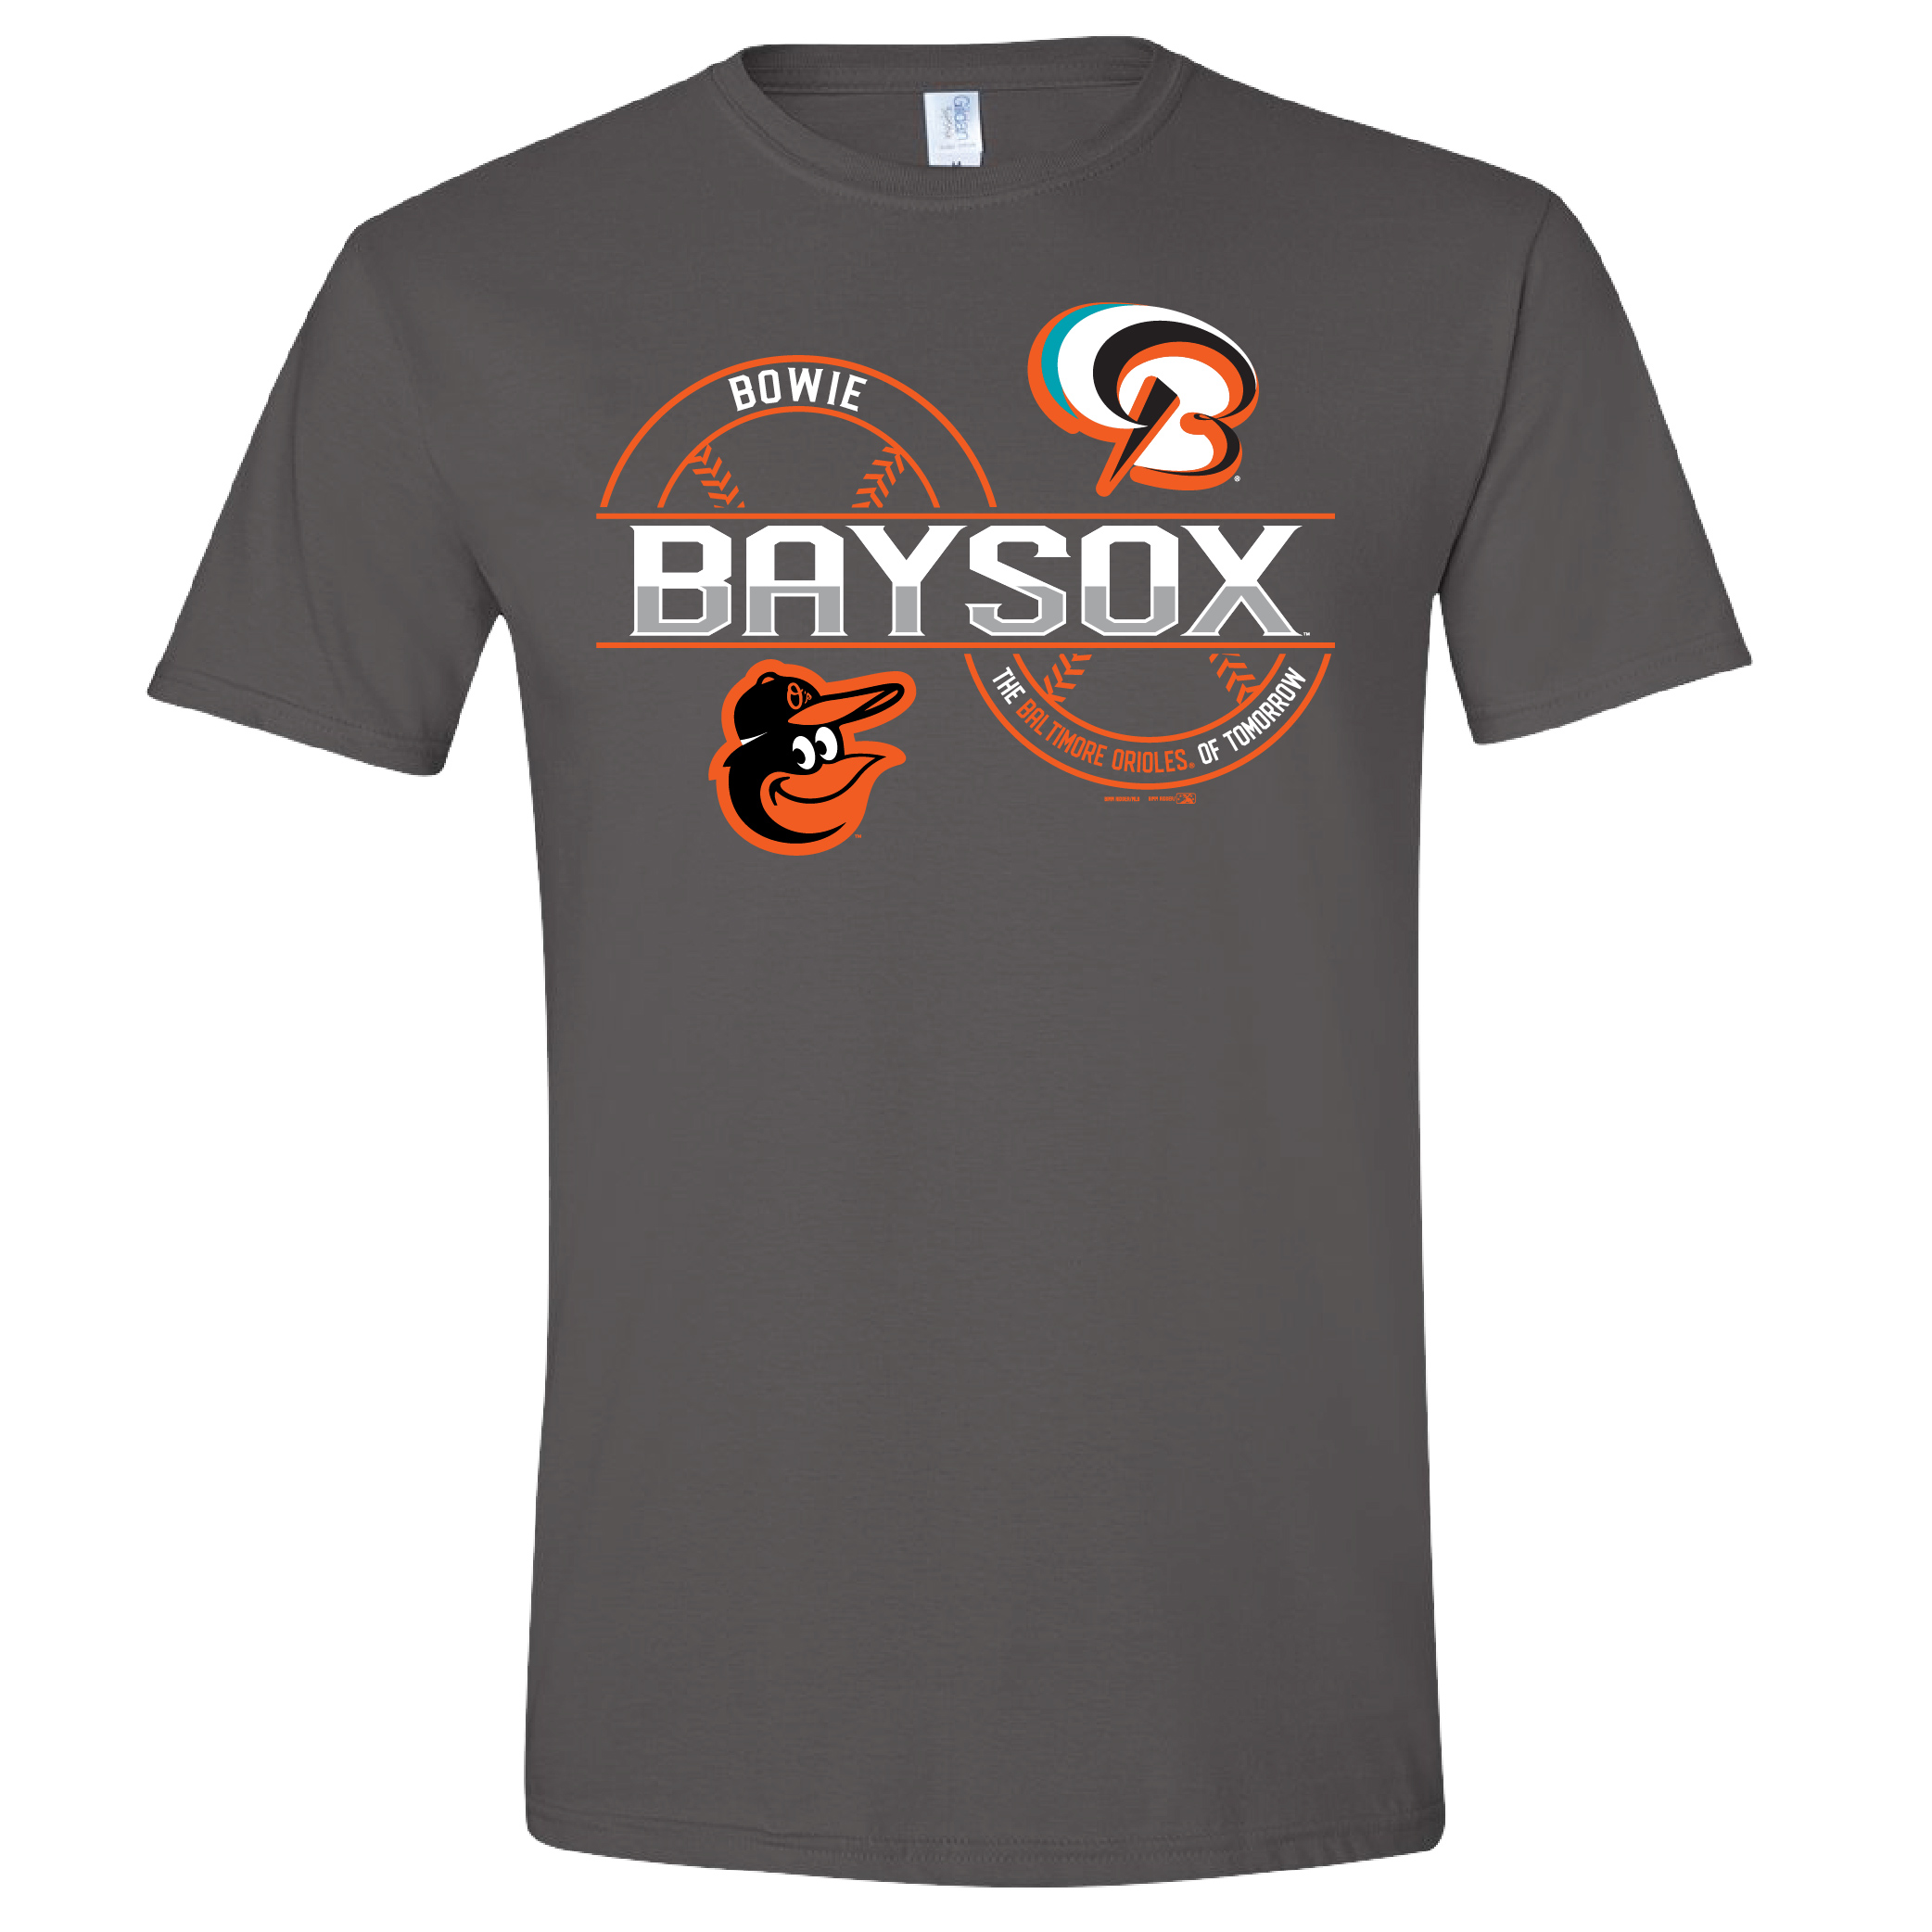 YOUTH Softstyle Split Baseball Charcoal Gray Baysox/Orioles T-Shirt